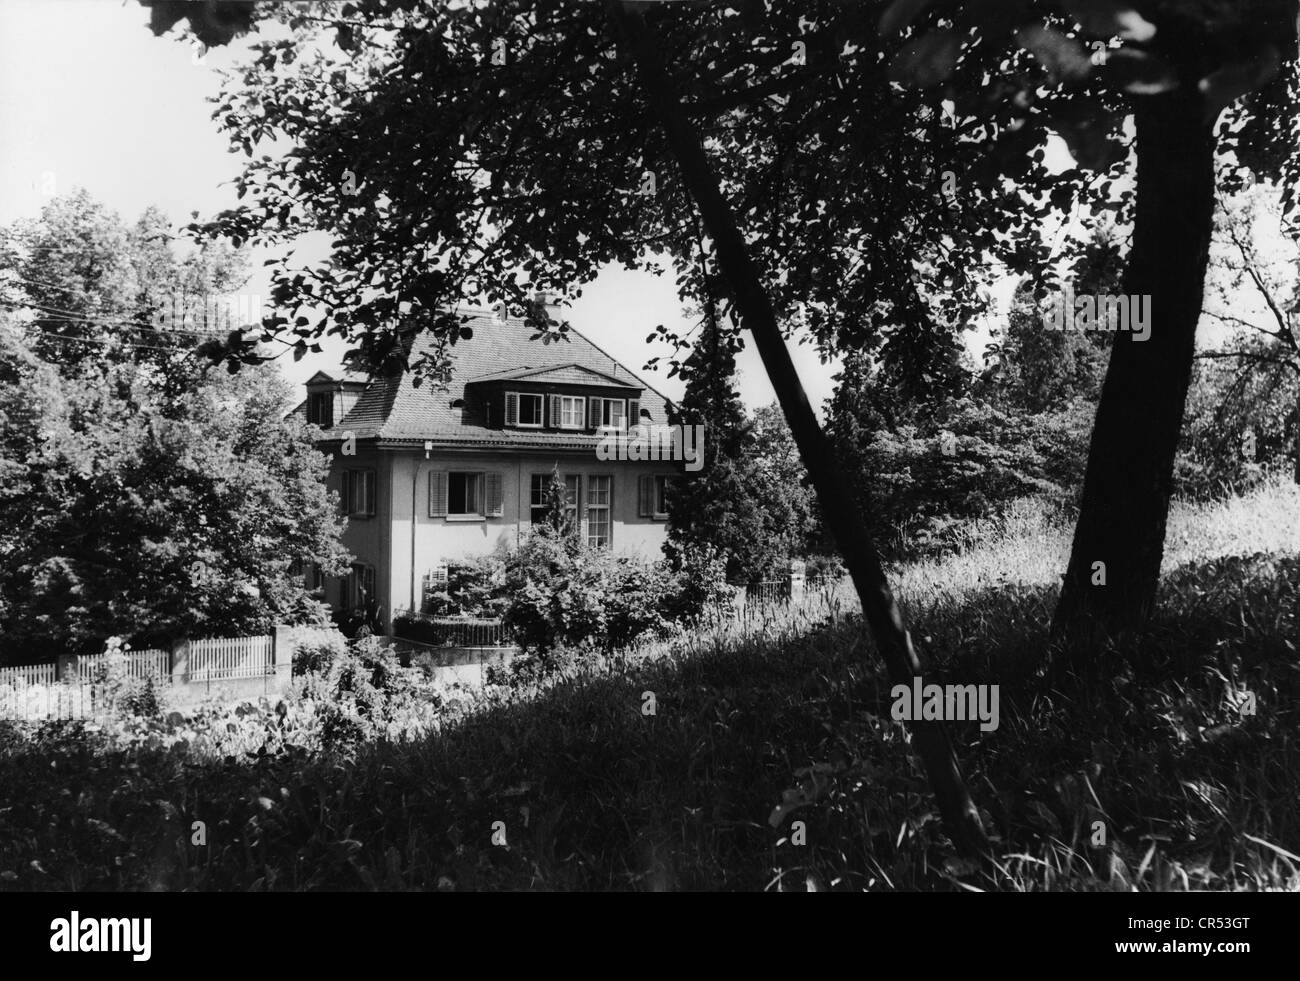 Mann, Thomas, 6.6.1875 - 12.8.1955, German author /writer, Nobel Prize for literature 1929, his house in Kilchberg at Lake Zurich, Alte Landstrasse No 39, Switzerland, exterior view, garden, 1950s, Stock Photo